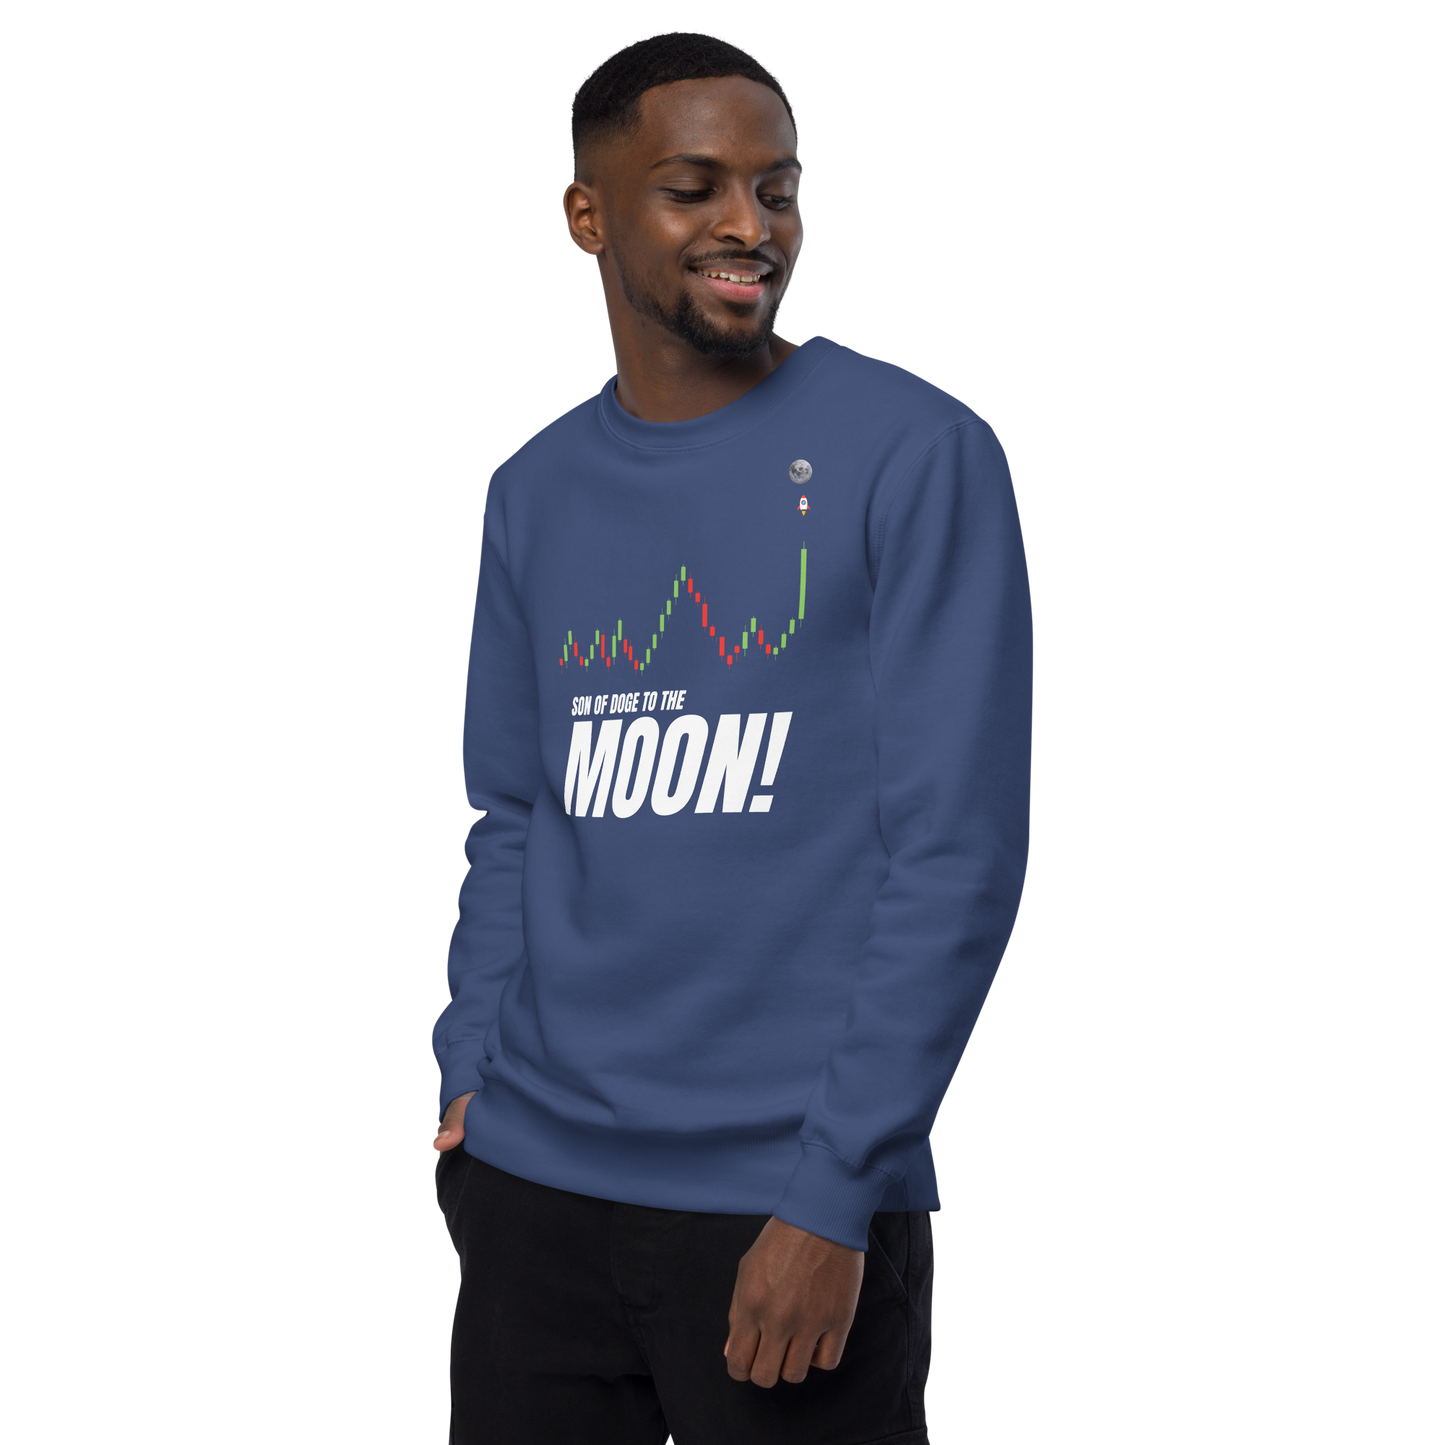 Son Of Doge 'To The Moon' Men's fashion sweatshirt